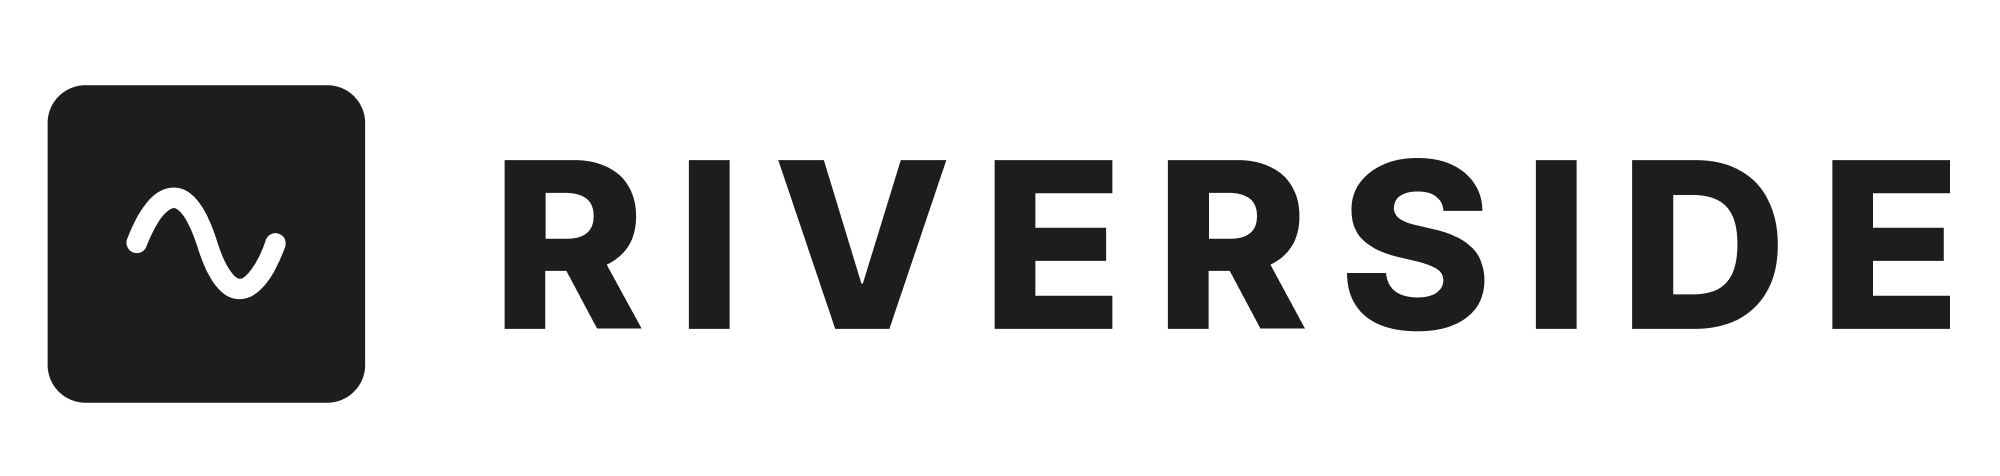 riverside logo 1 Best Software Reseller | Best Software Providers in India